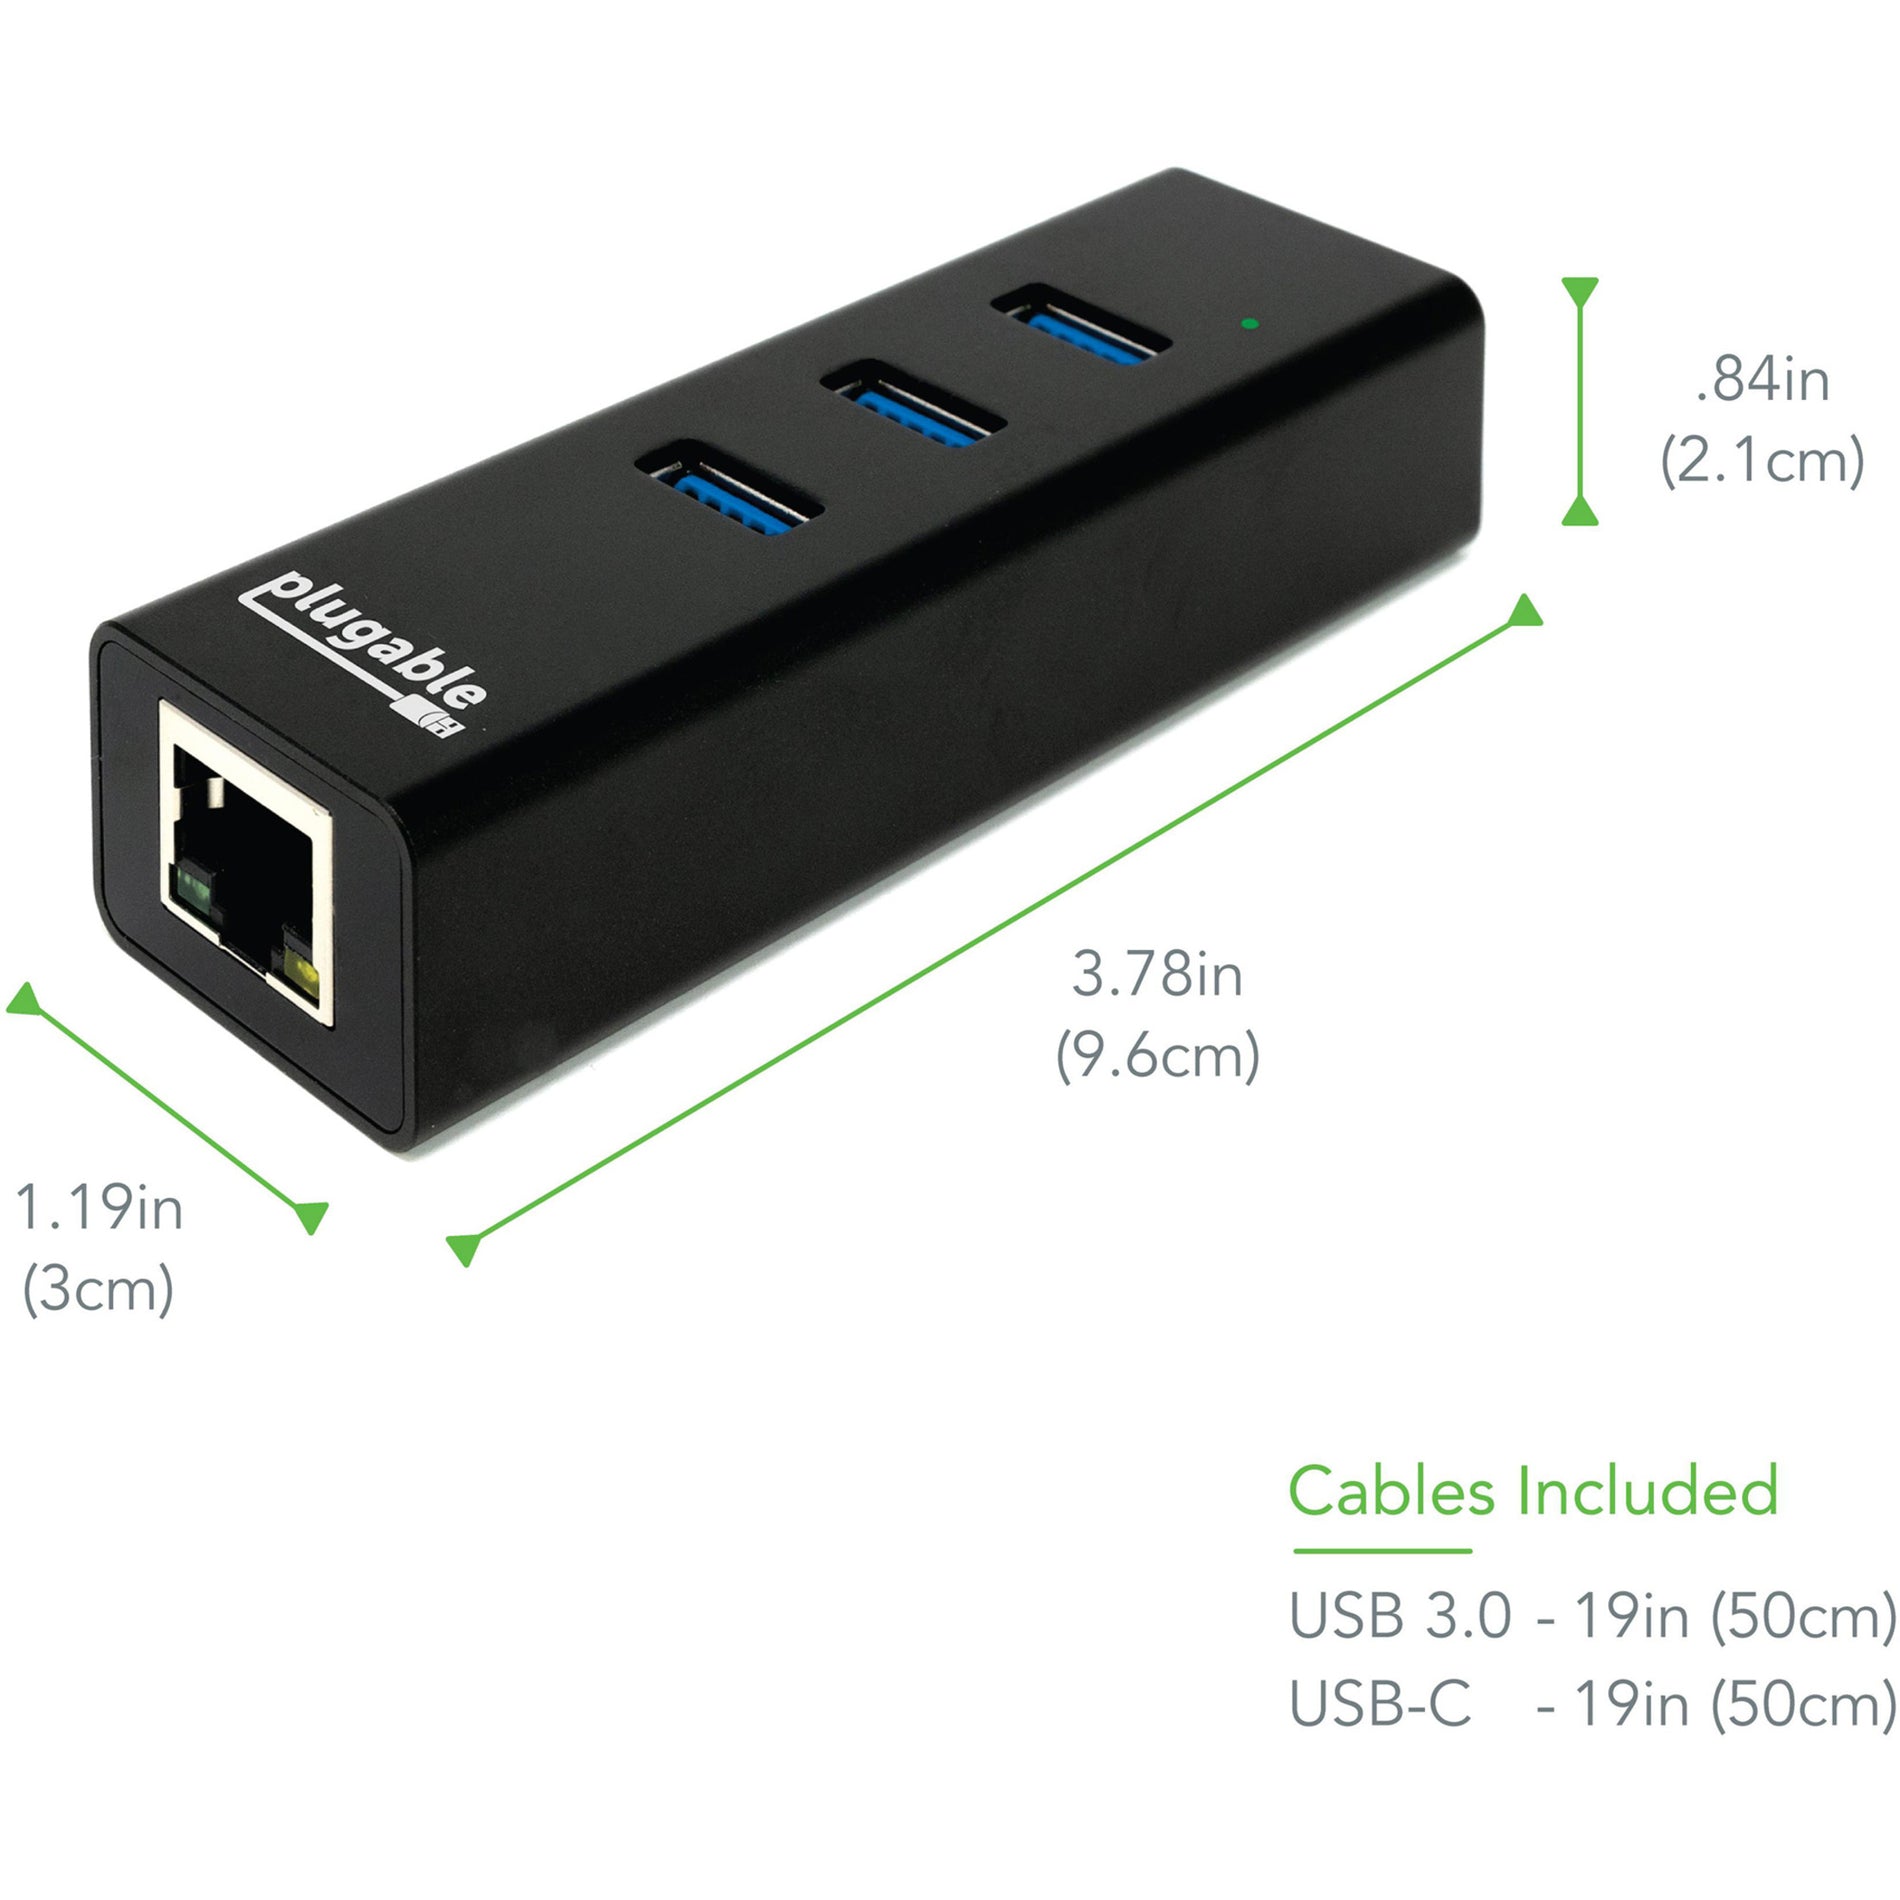 Plugable USB3-HUB3ME USB 3.0 GIGABIT ETHERNET ADAPTER, 3 Port USB Hub with Ethernet